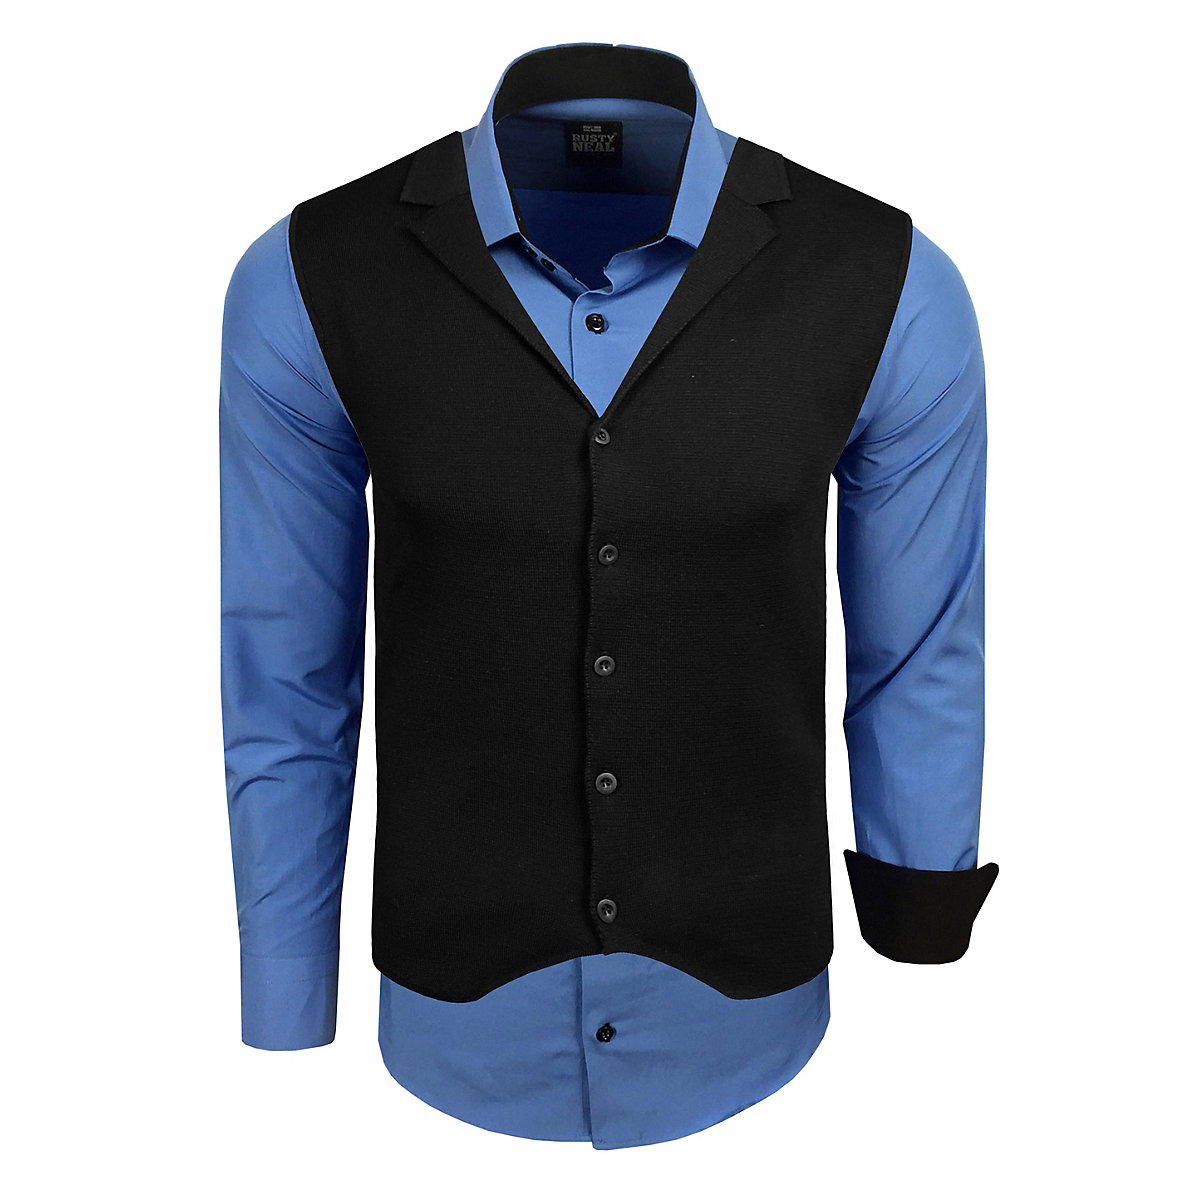 RUSTY NEAL Hemden-Set blau